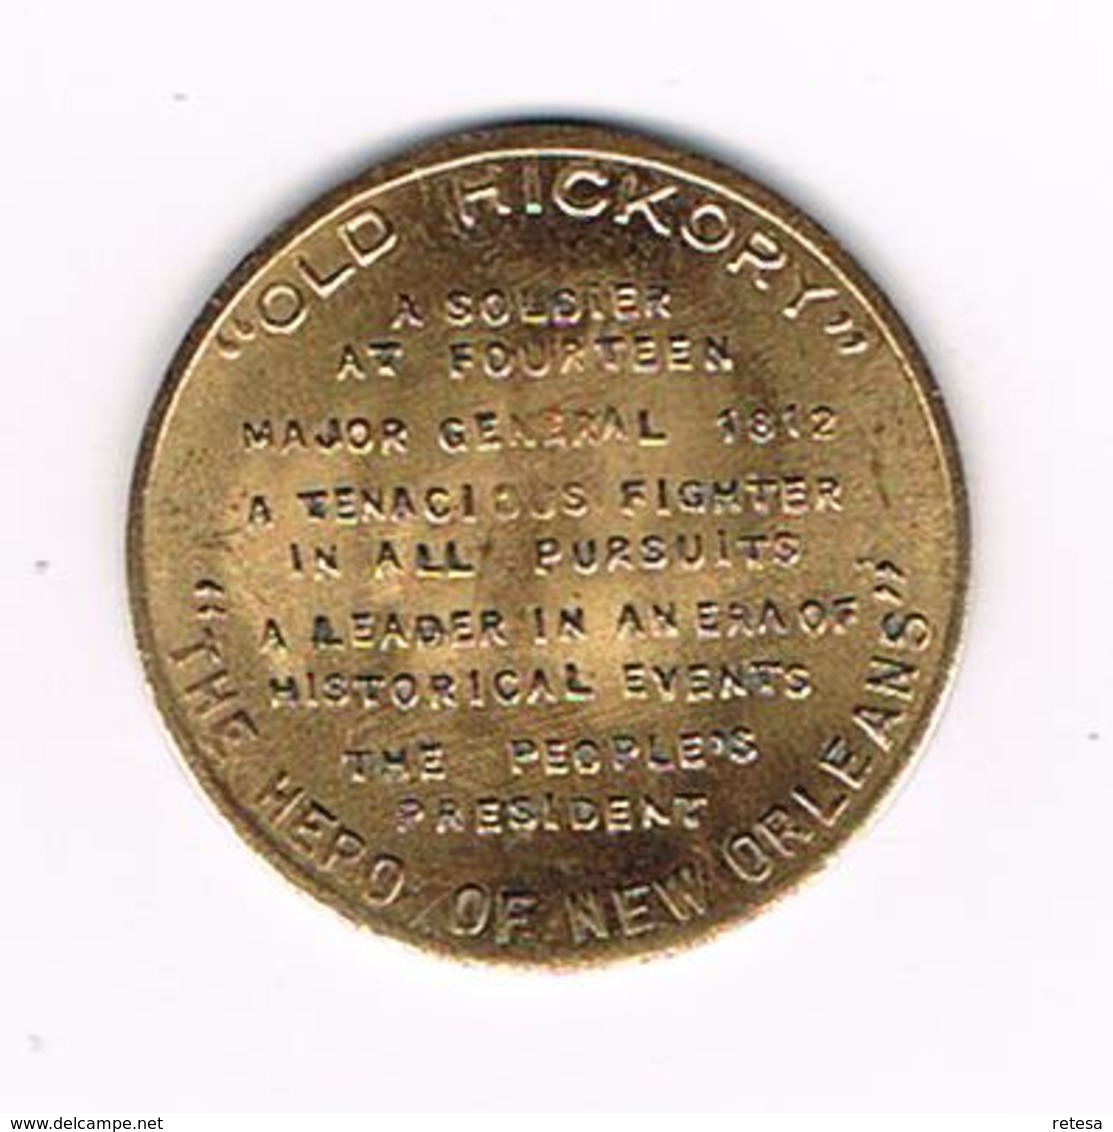 &- PENNING  ANDREW  JACKSON  7 TH  PRESIDENT  U.S.A. - Pièces écrasées (Elongated Coins)